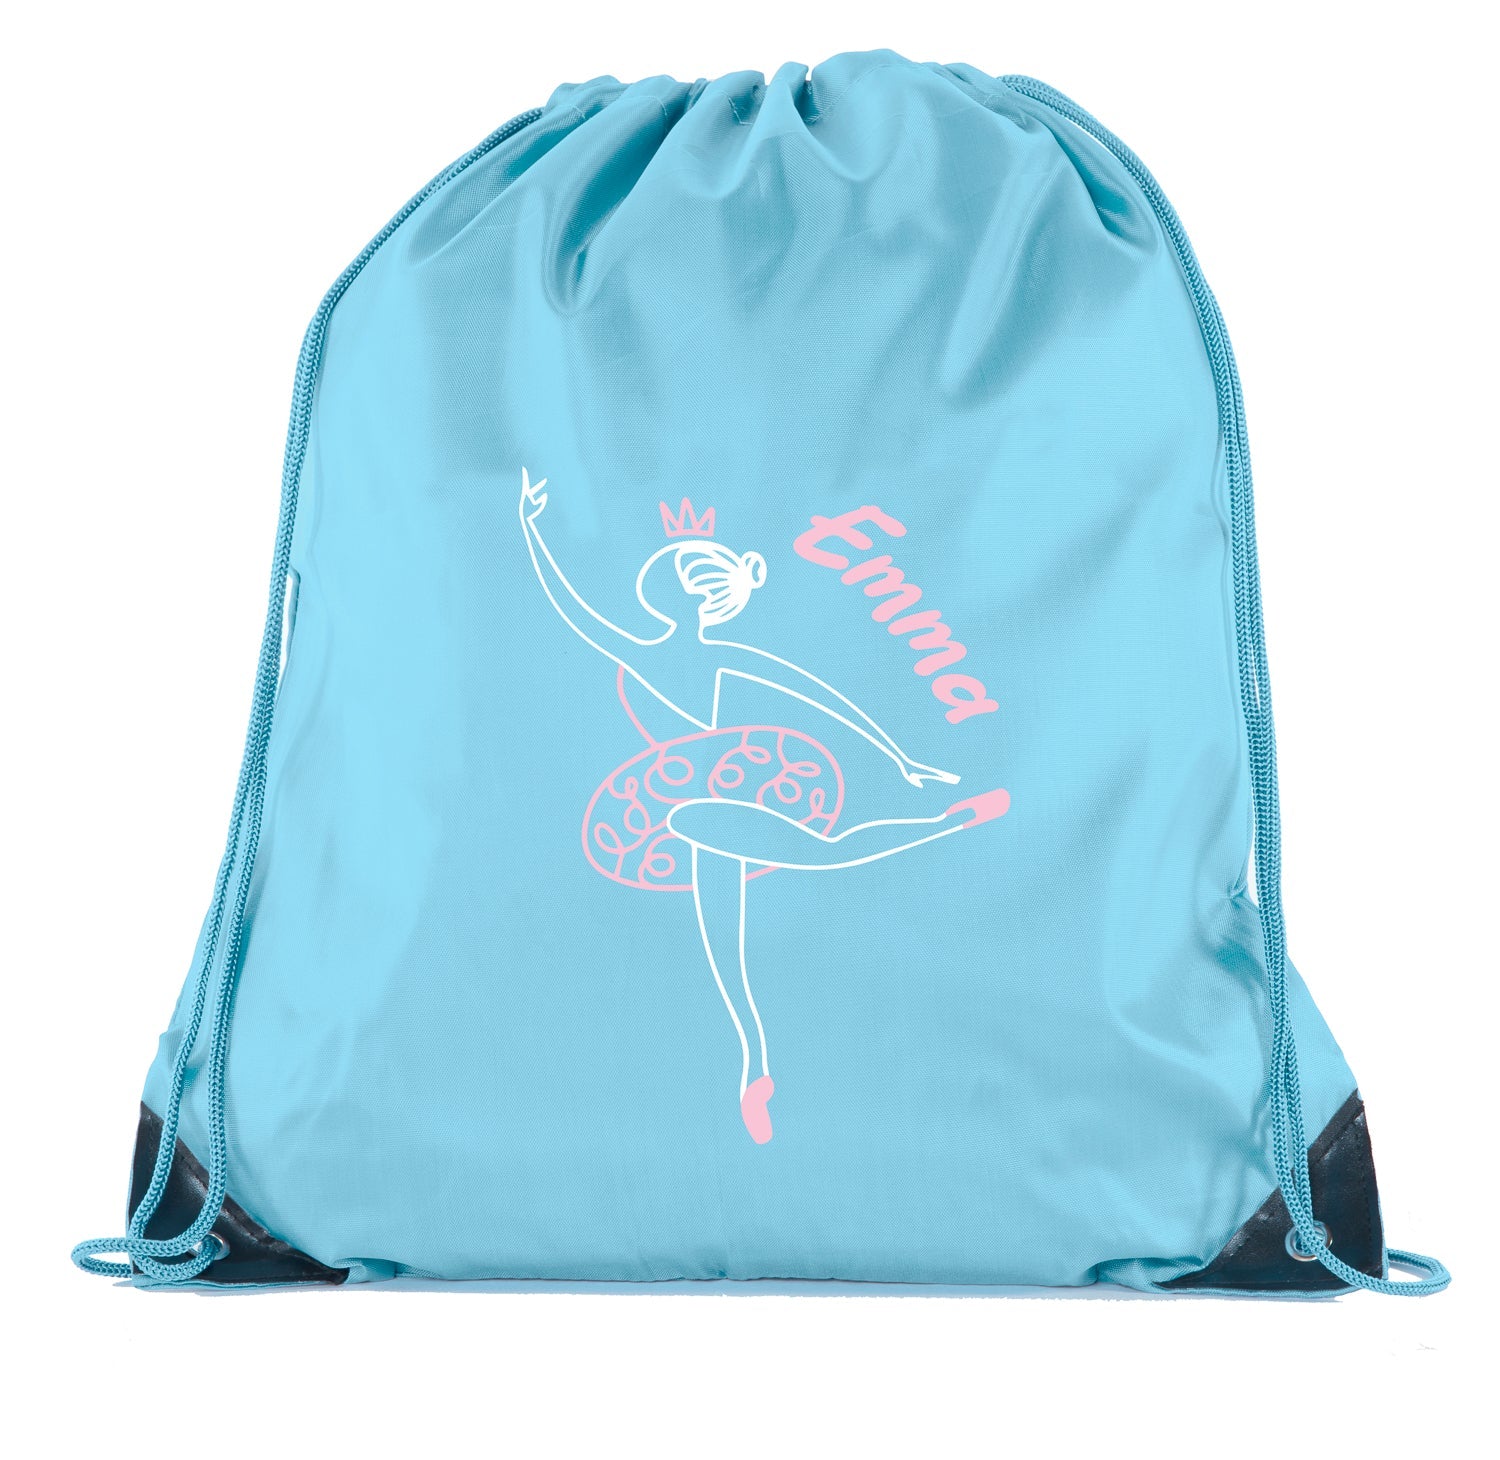 Ballerina Développé Custom Name Polyester Drawstring Bag